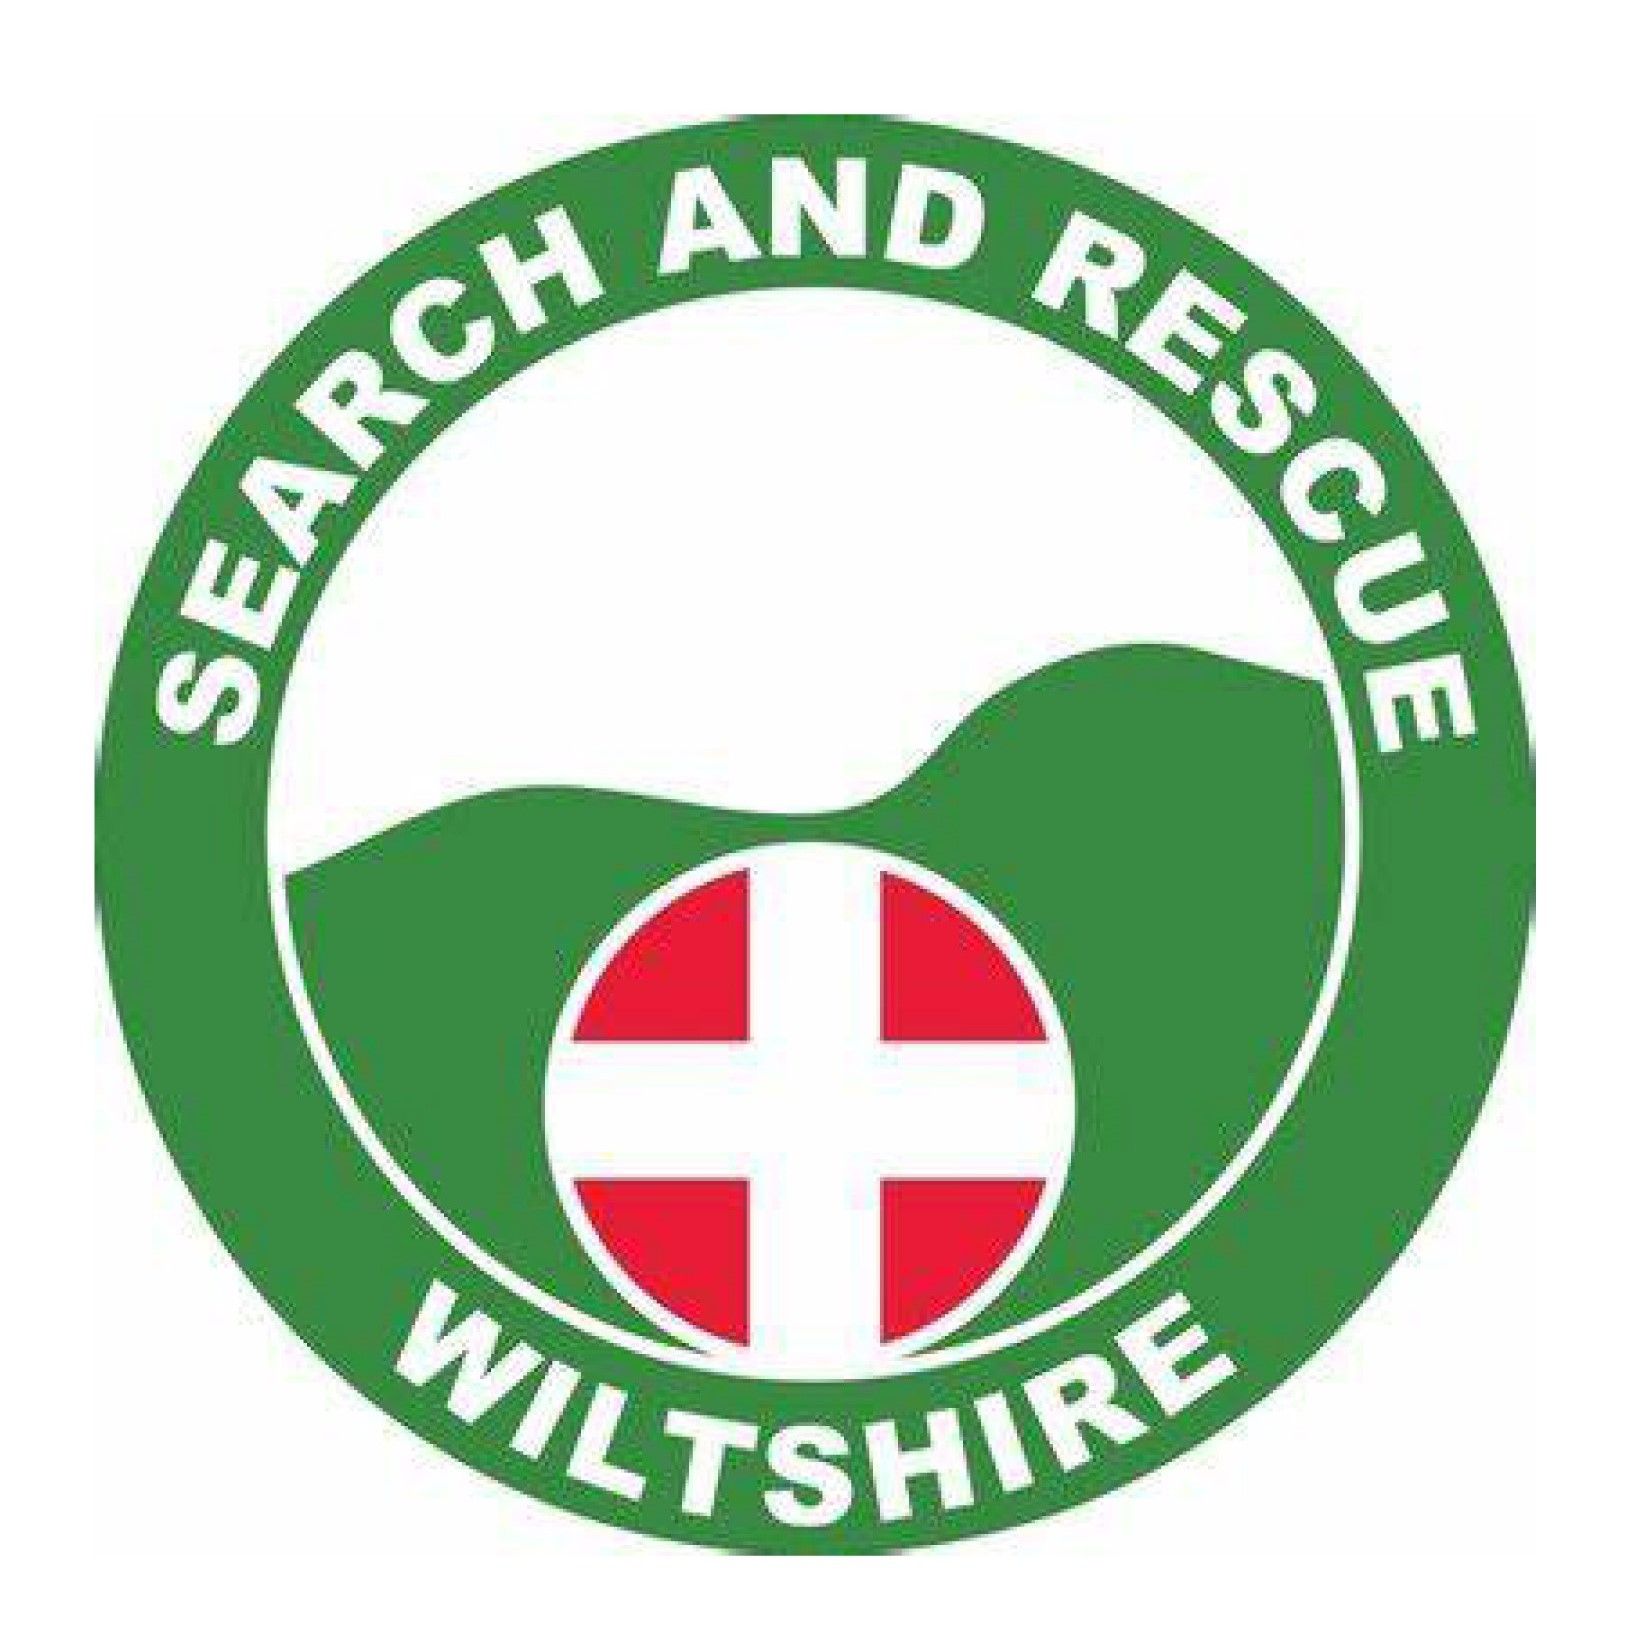 wiltshire search and rescue square logo